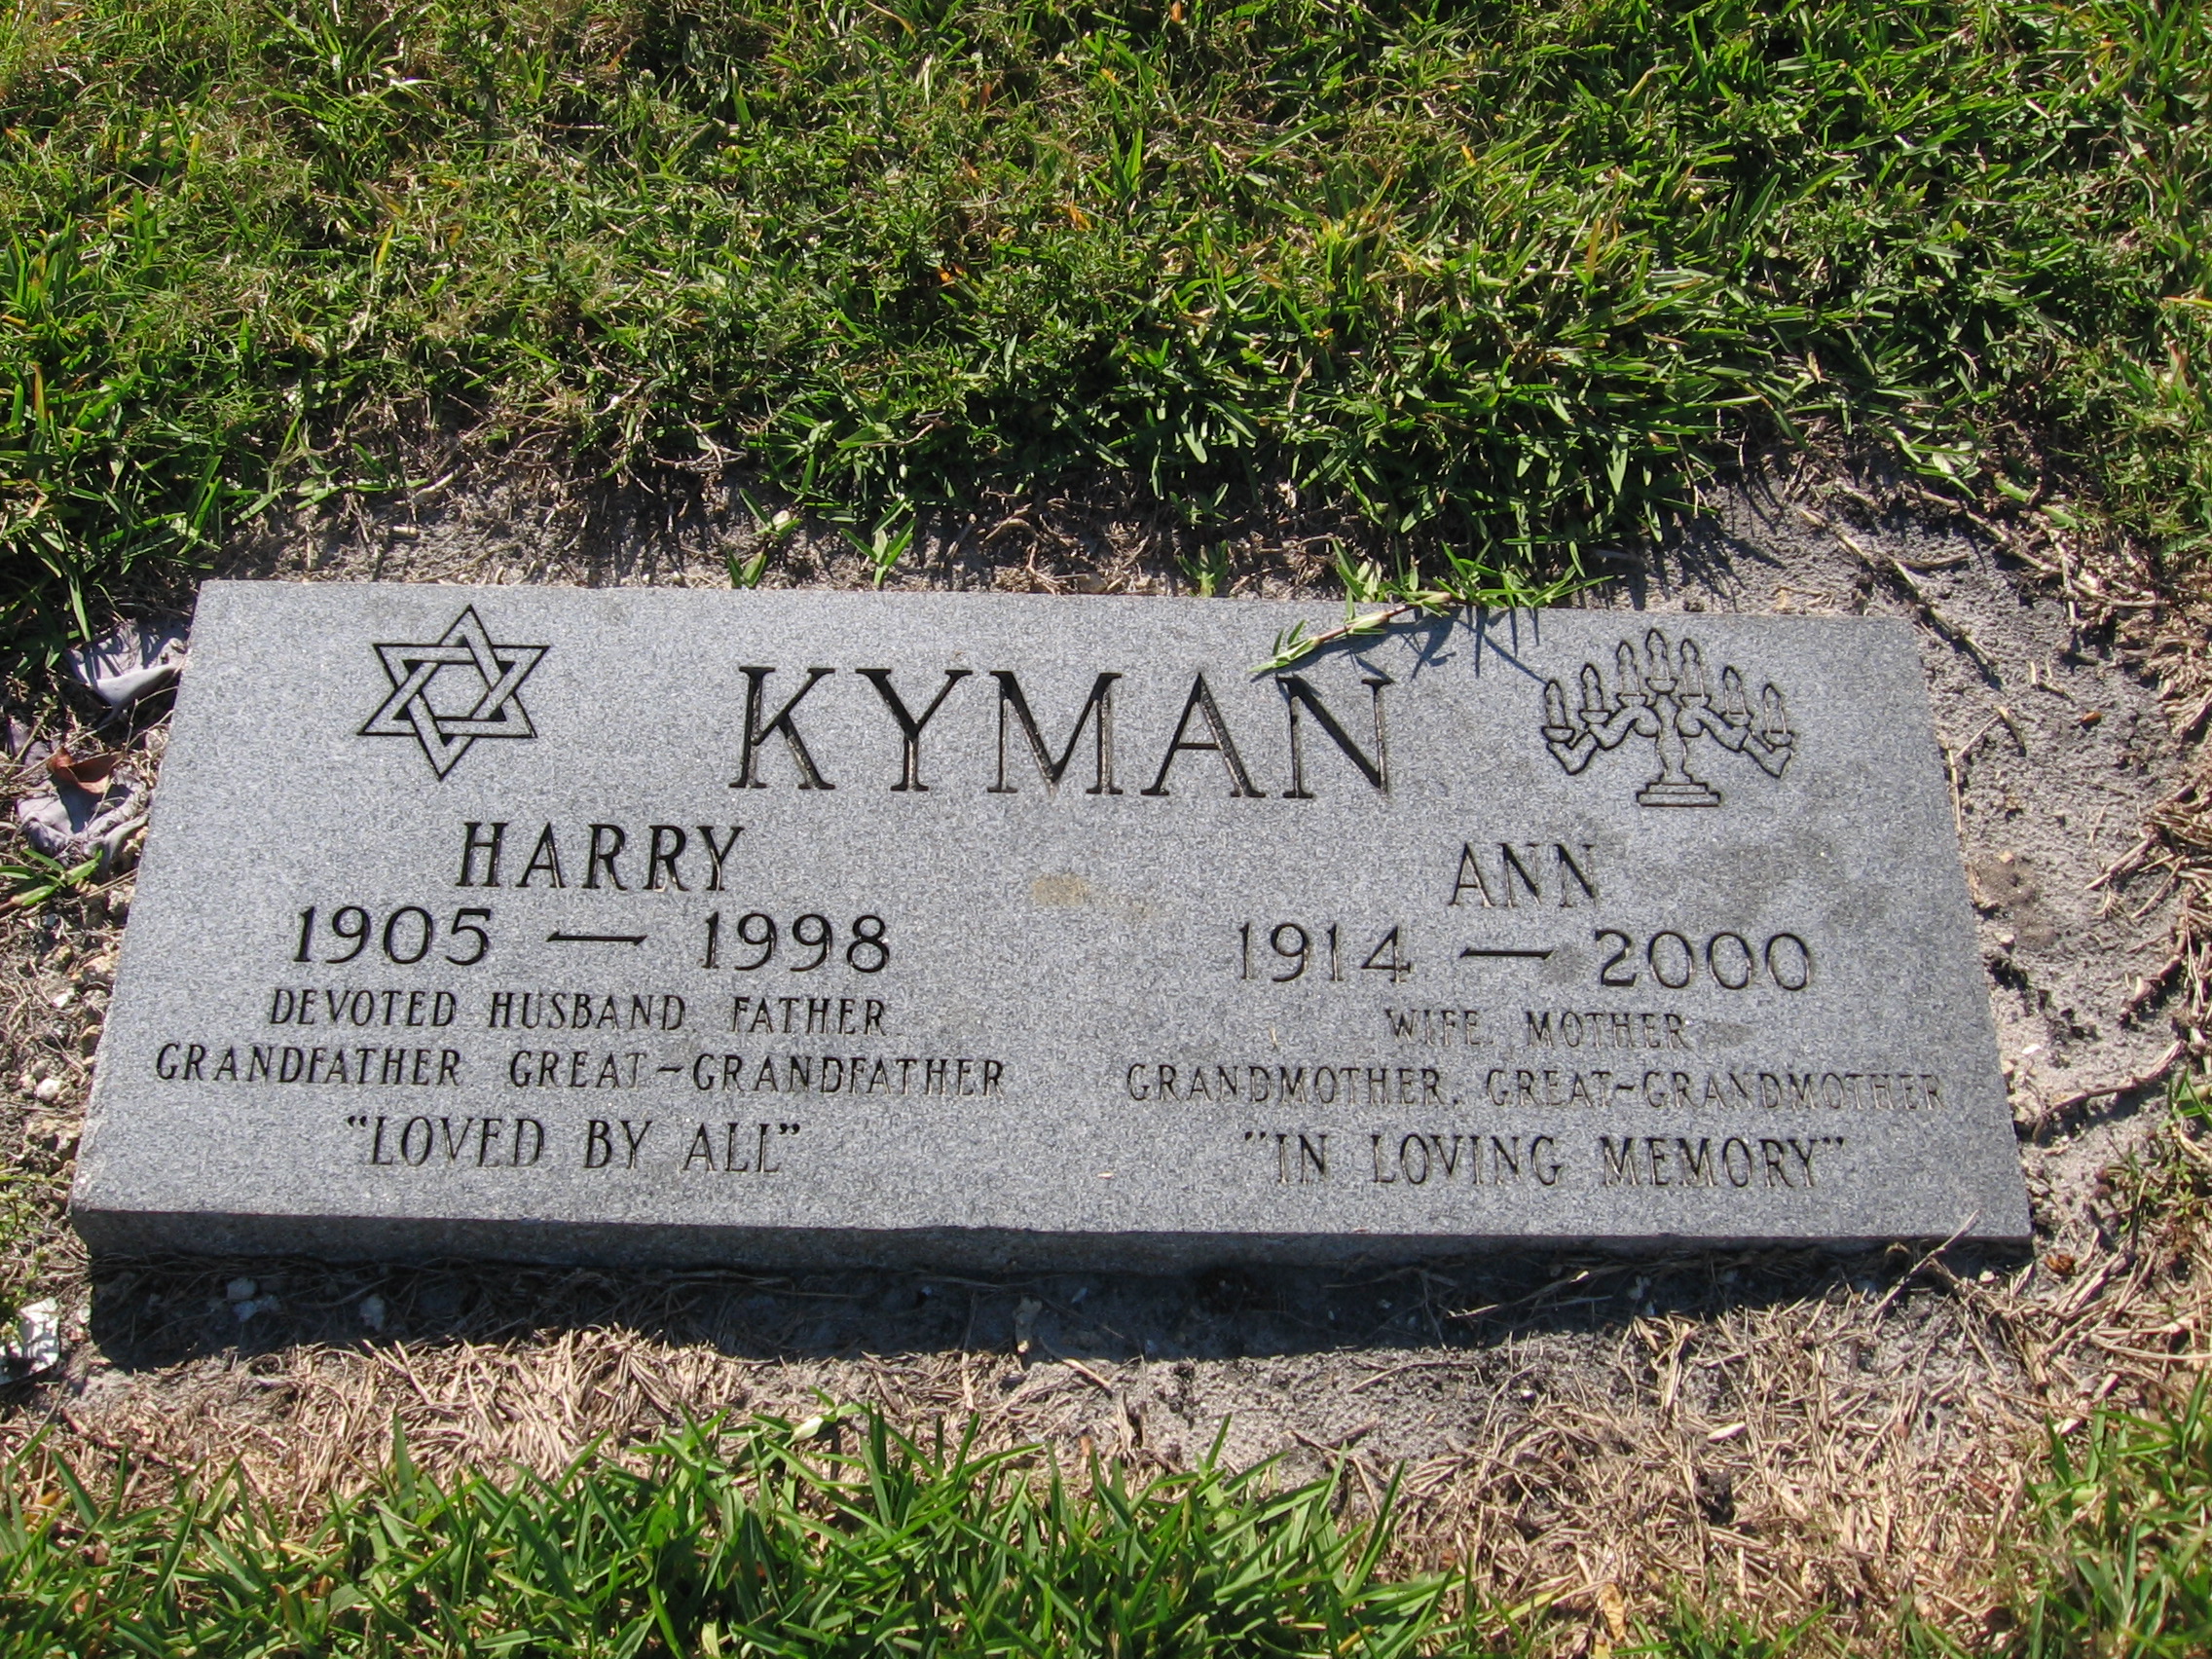 Harry Kyman